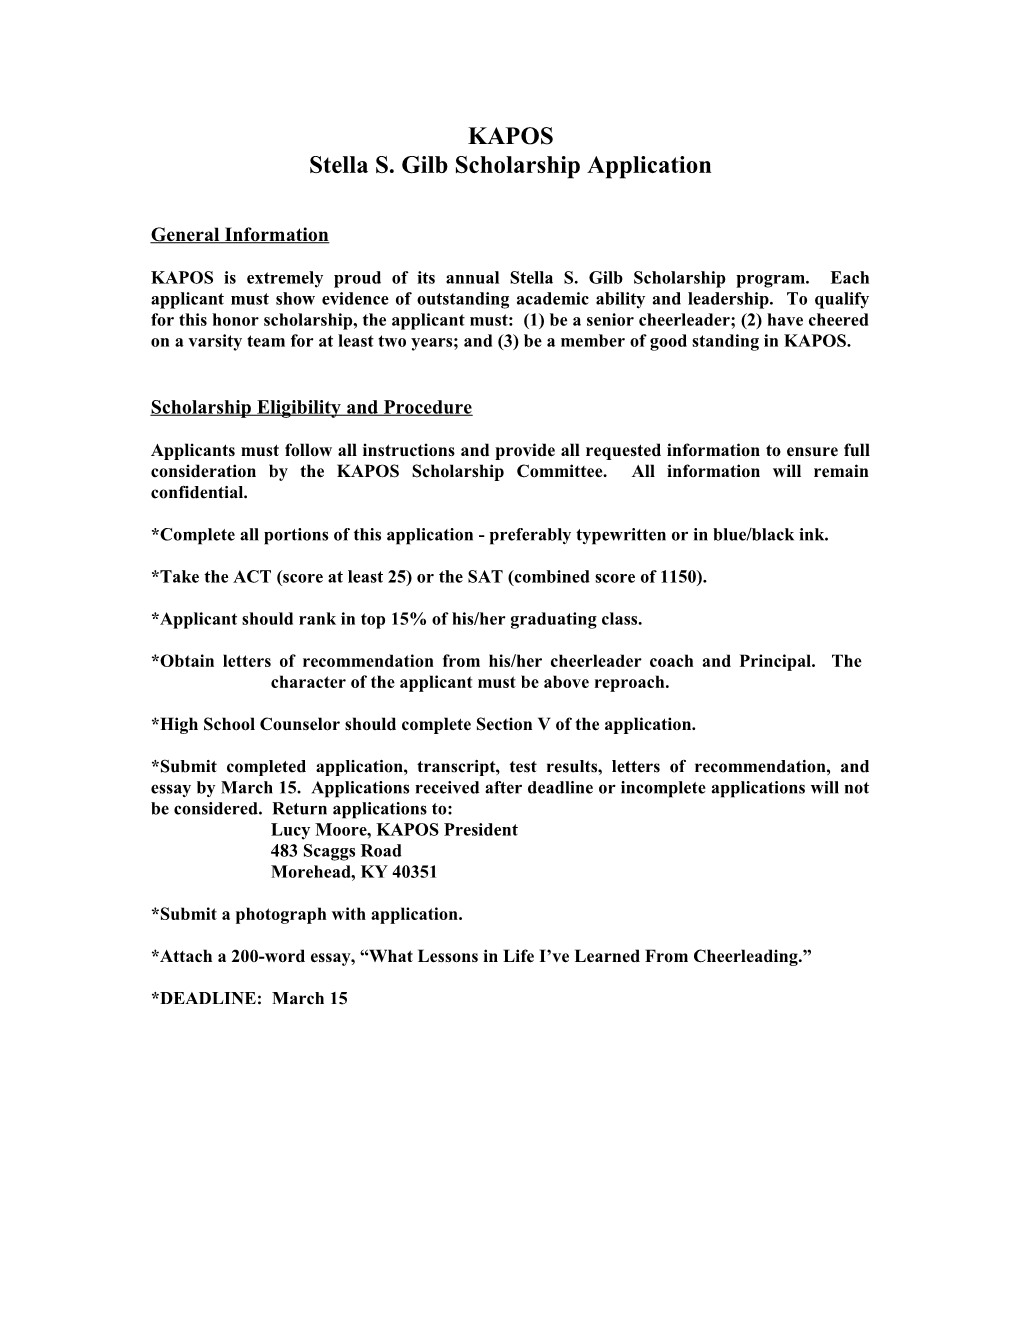 Stella S. Gilb Scholarship Application